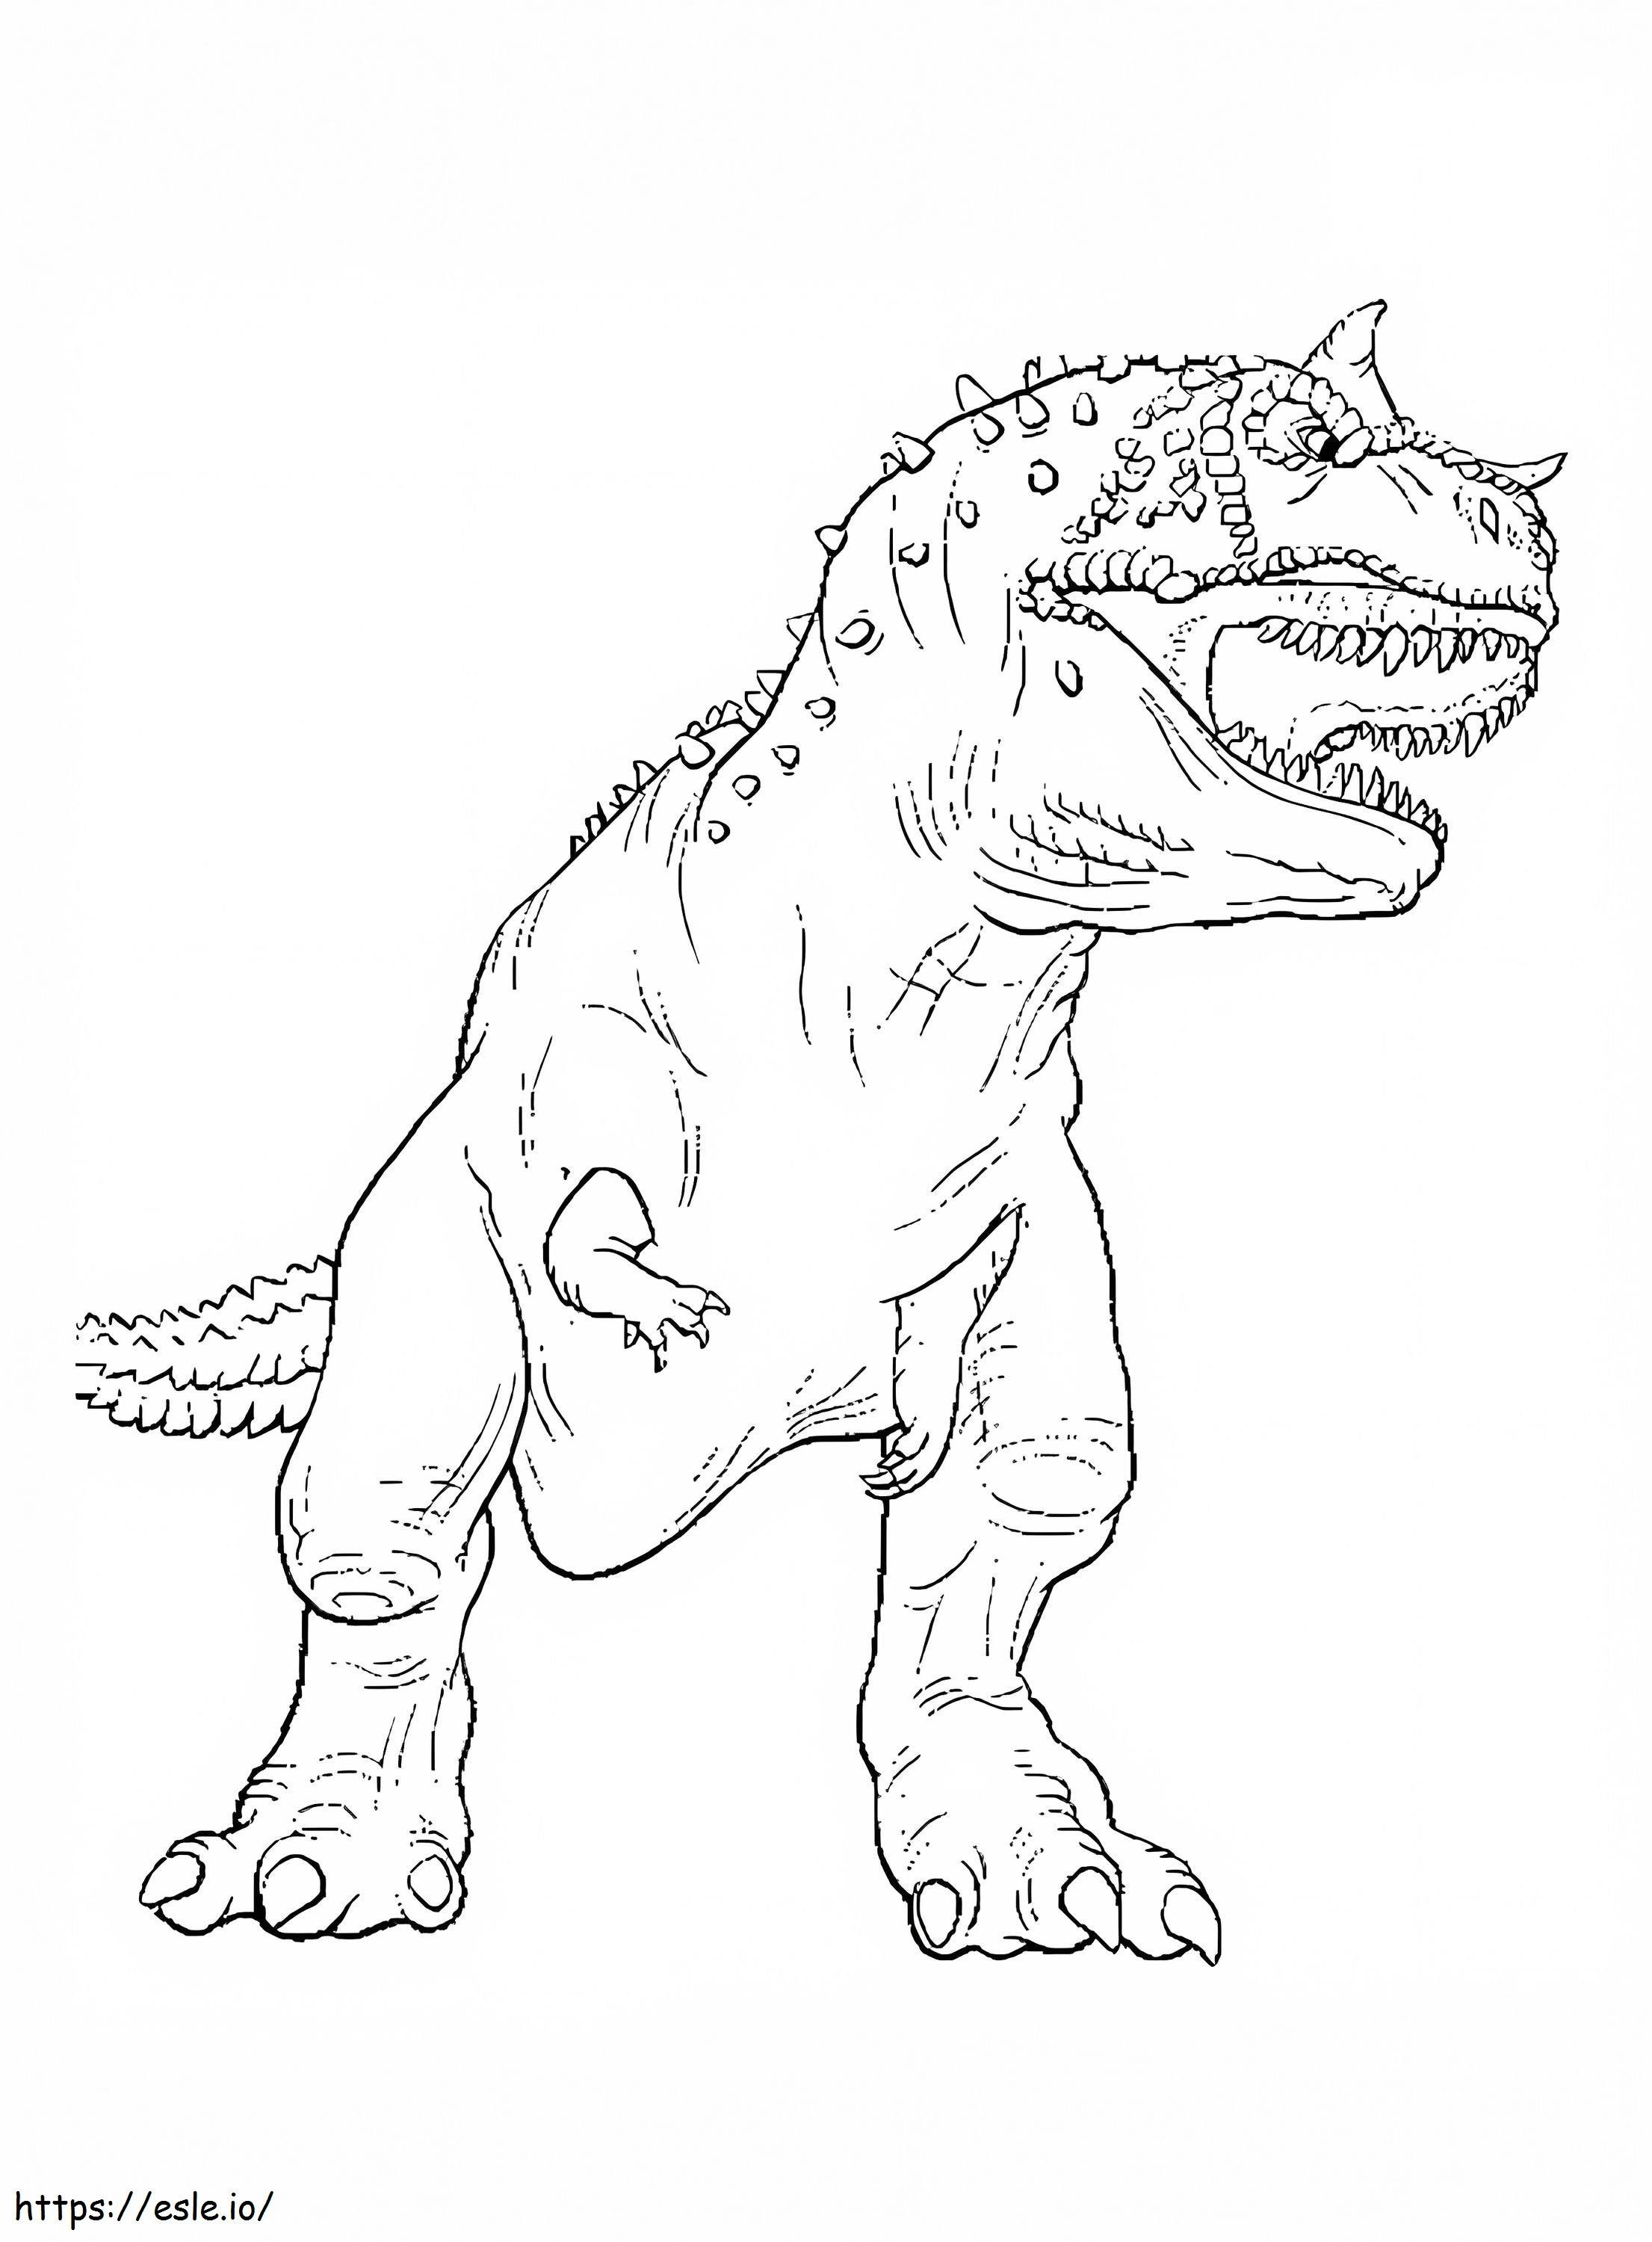 Carnotaurus 4 coloring page